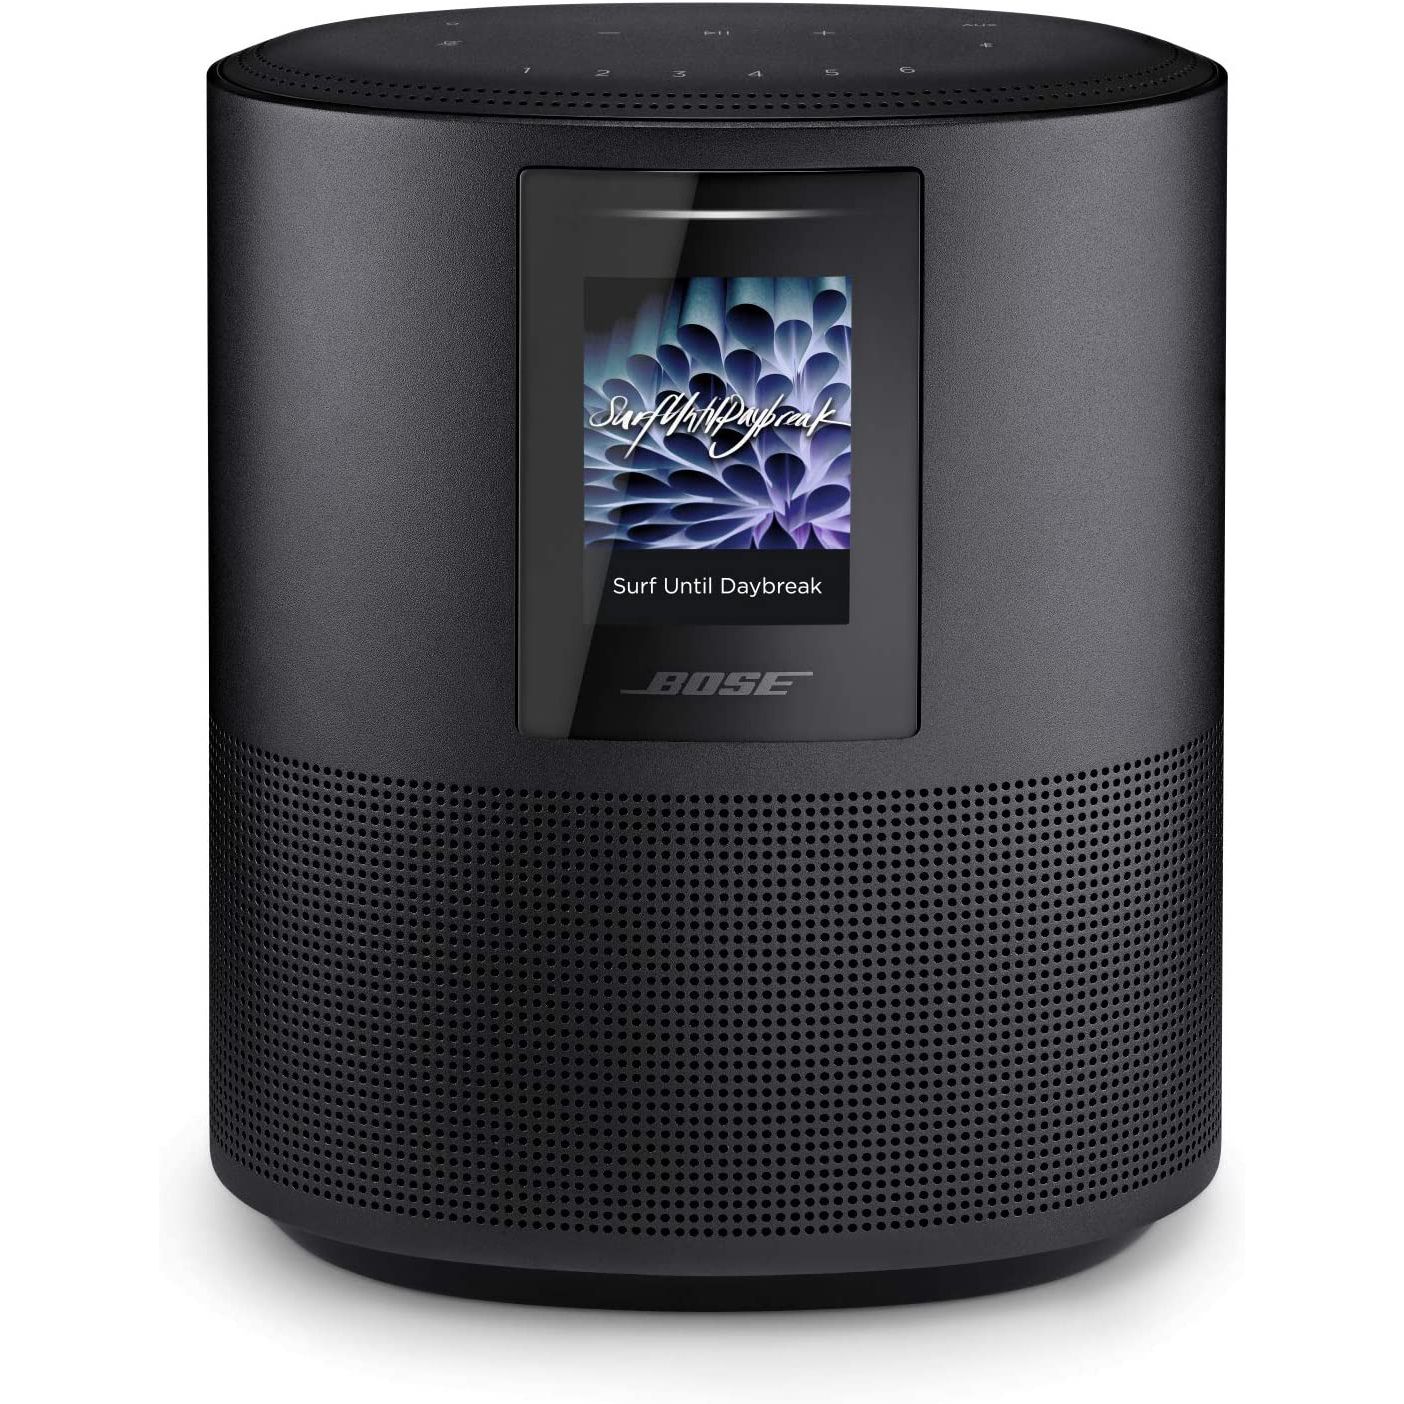 The Bose Home Speaker 500 white background